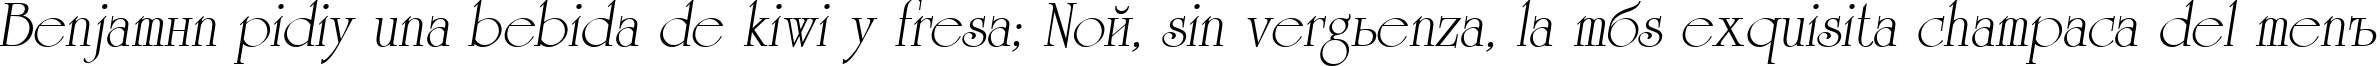 Пример написания шрифтом University Oblique текста на испанском